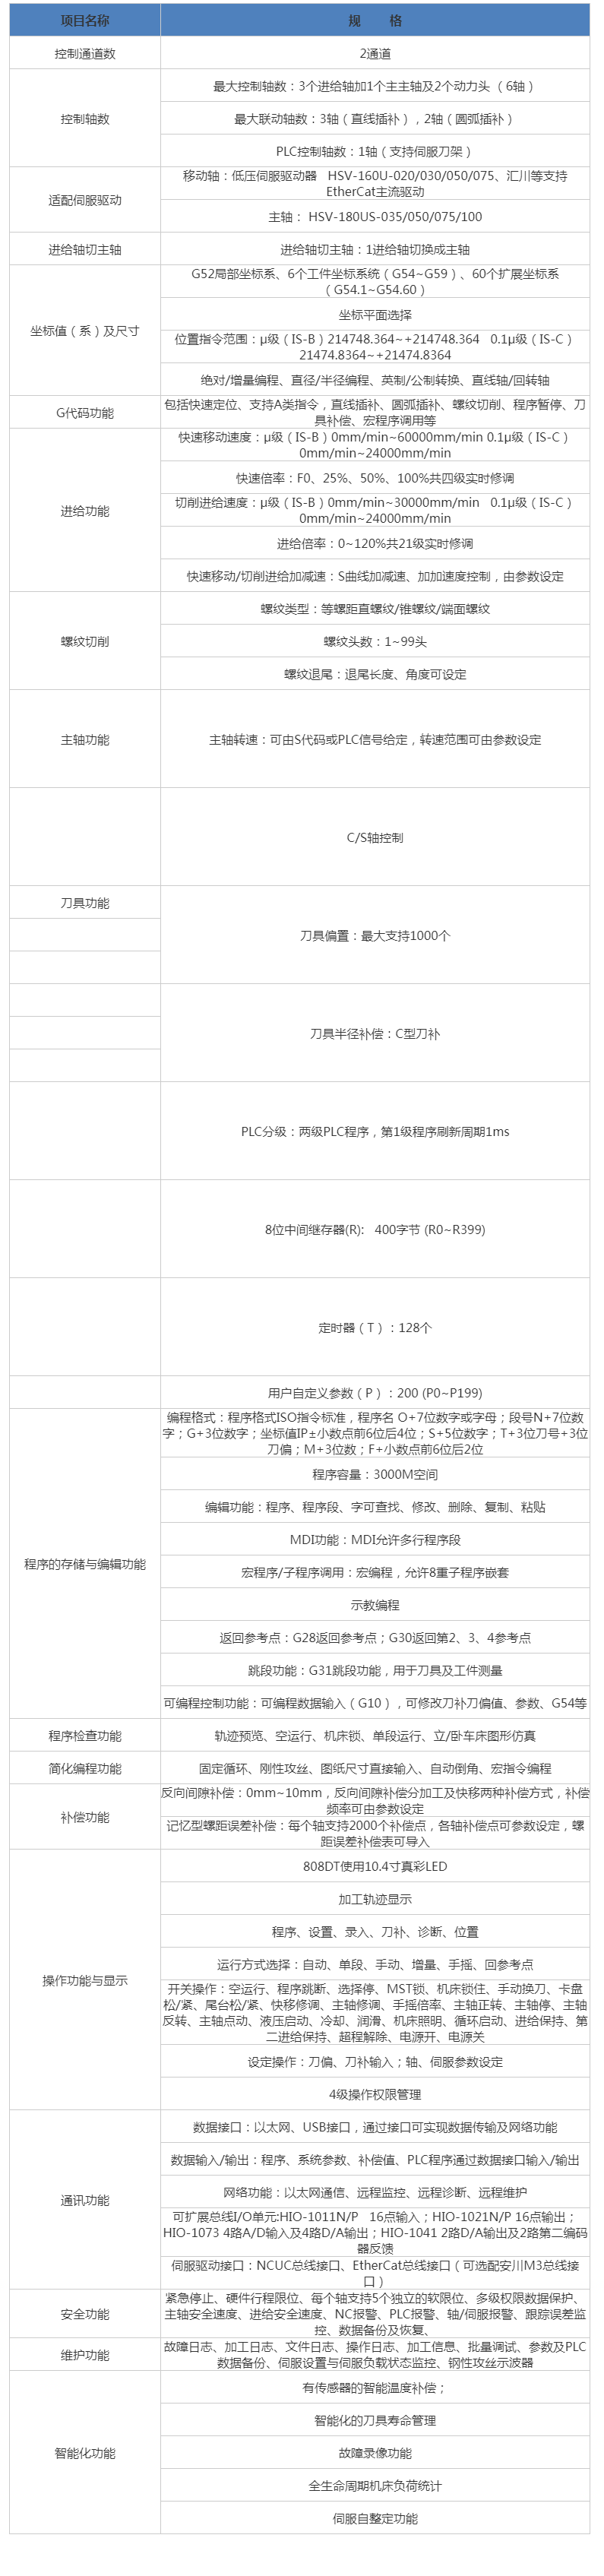 HNC-818DiT车床数控系统 武汉华中数控股份有限公司.png